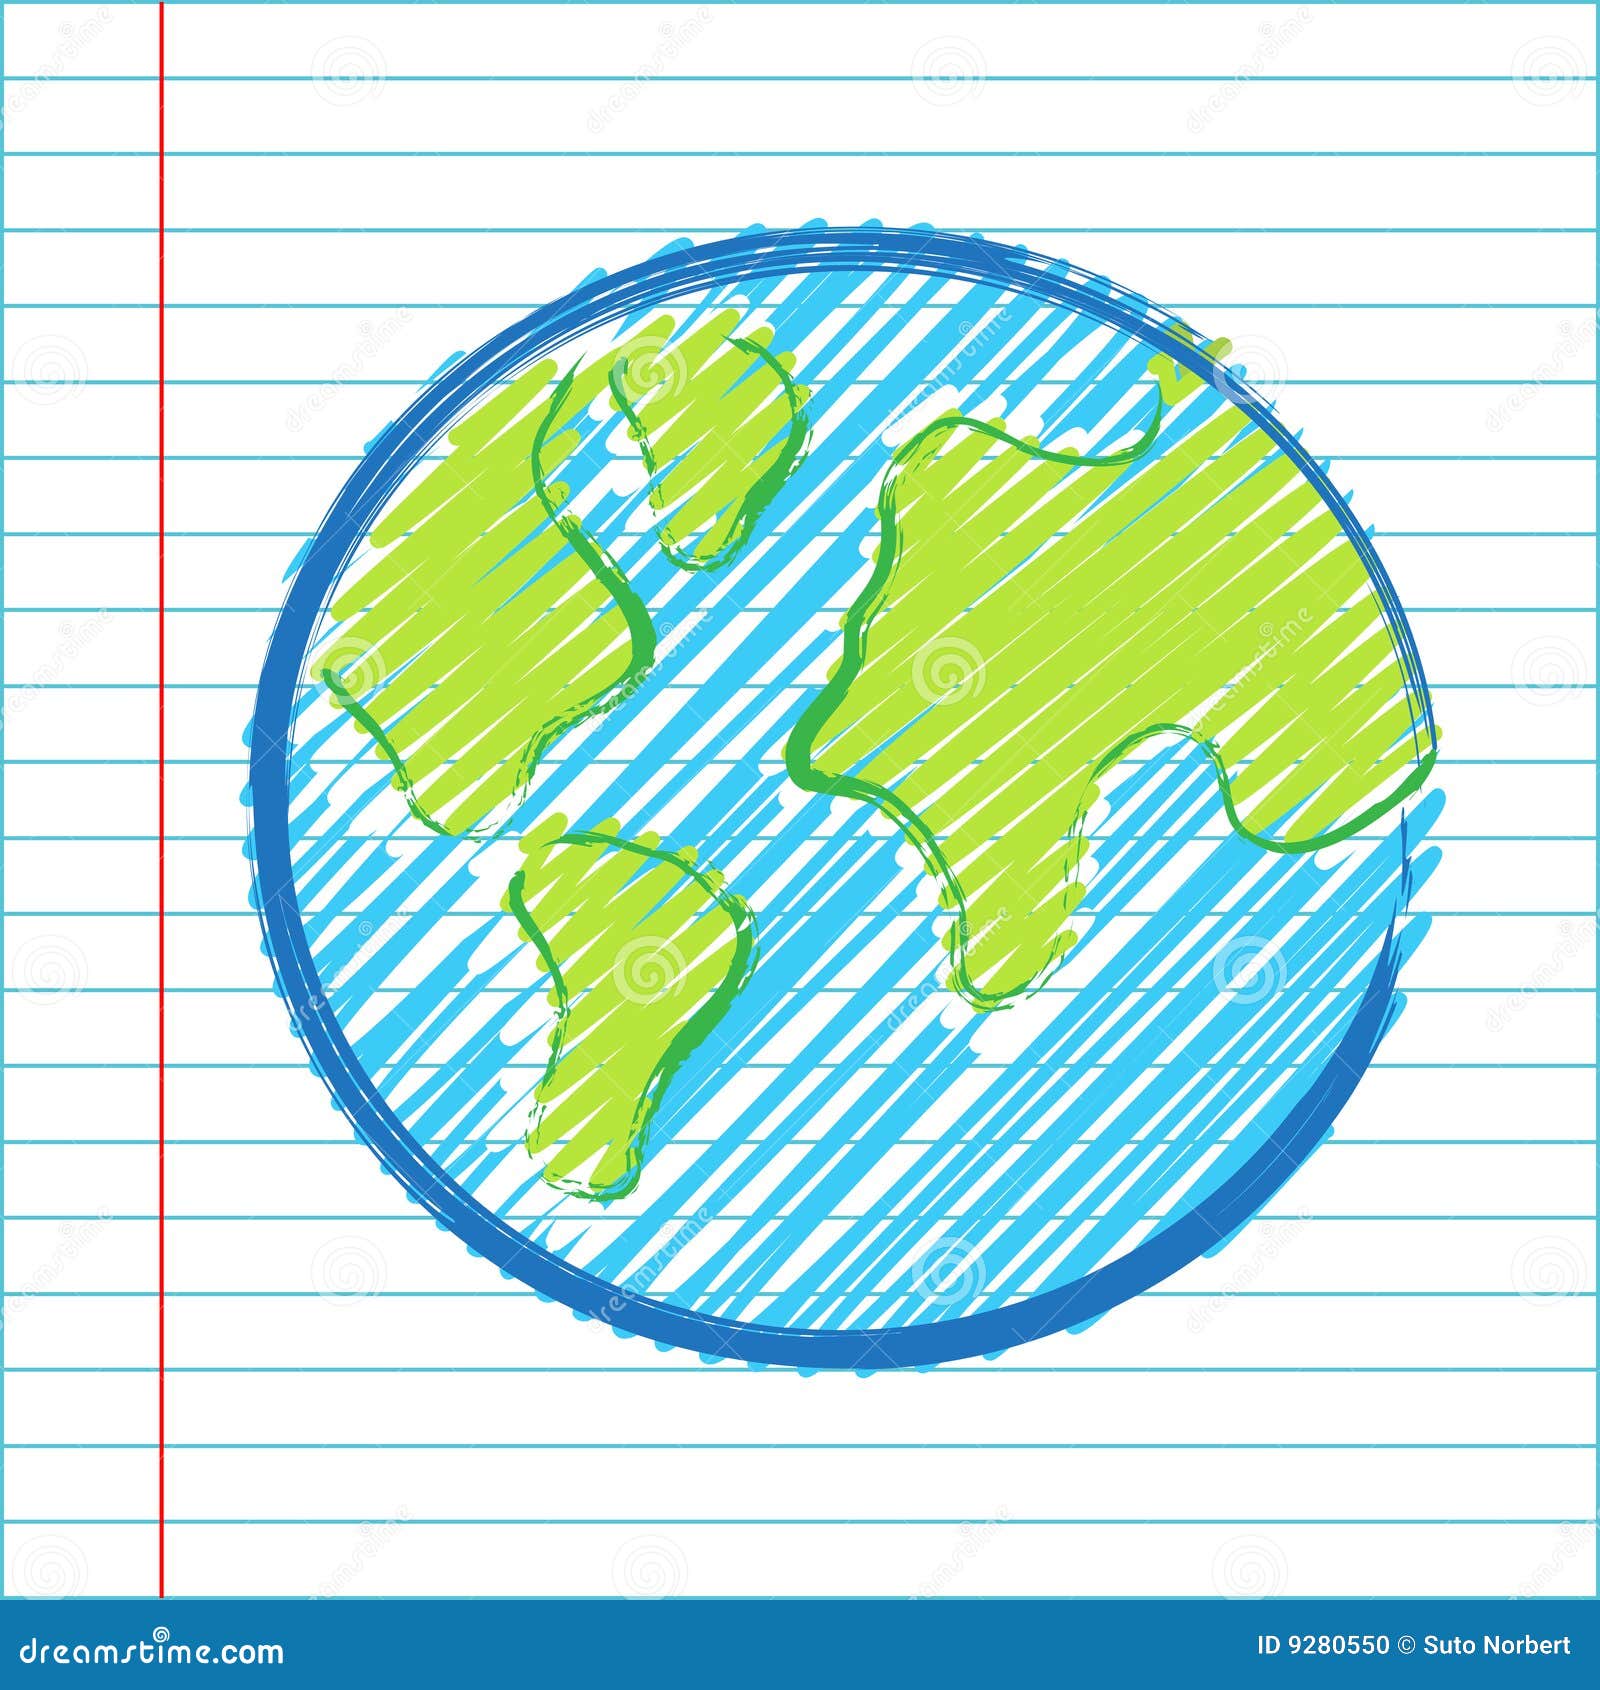 Hand drawing world map stock illustration. Illustration of